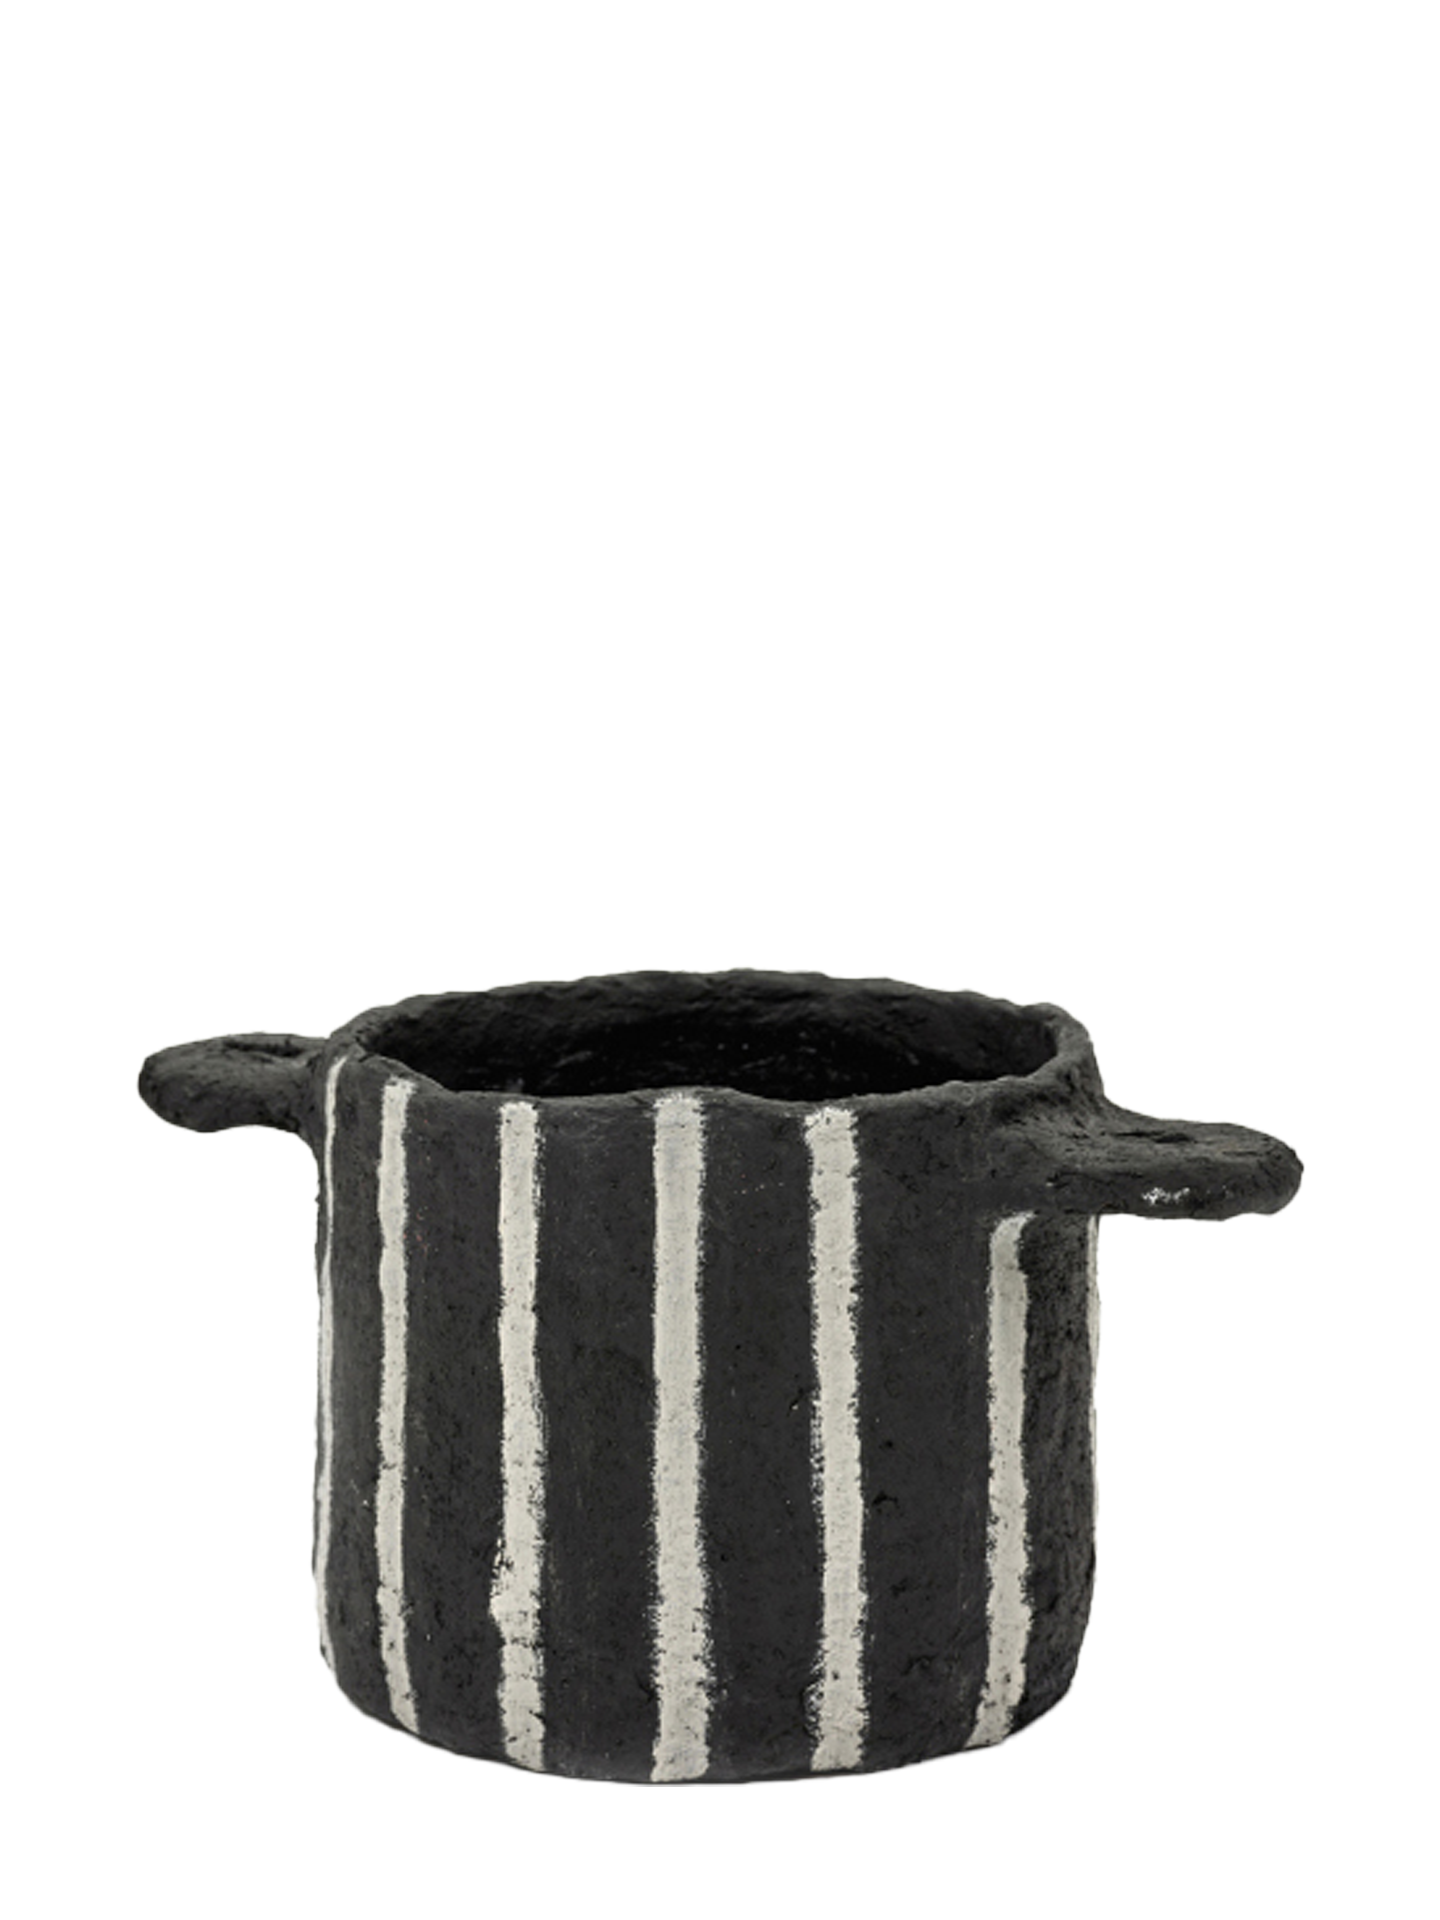 Earth Paper Mache Pot, Black with Vertical Stripes